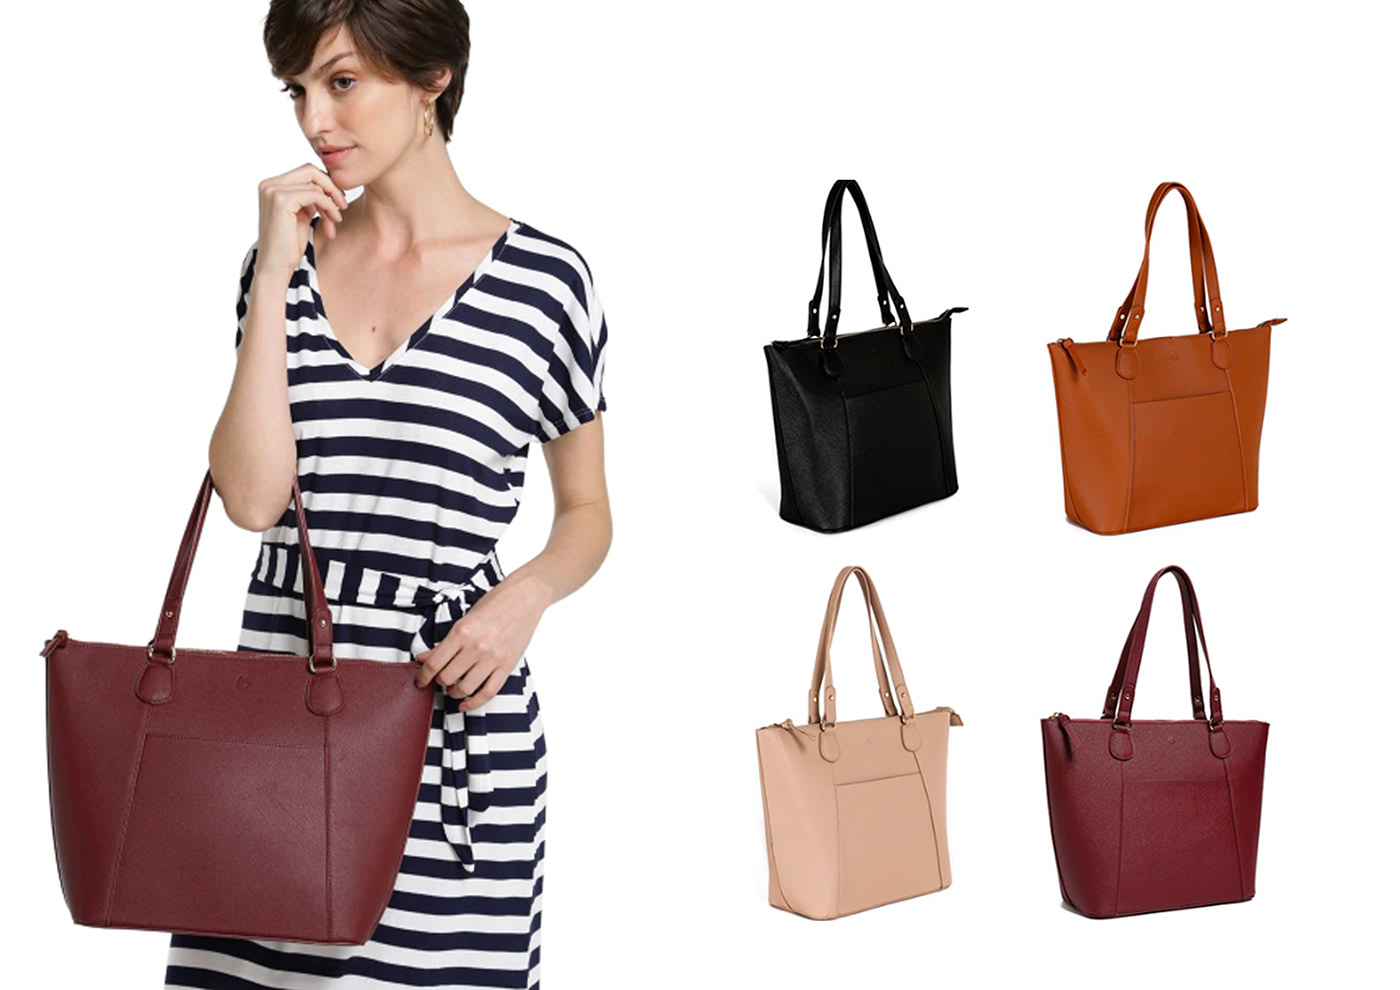 accessorie acessorios femininos Basic Bolsas handbag